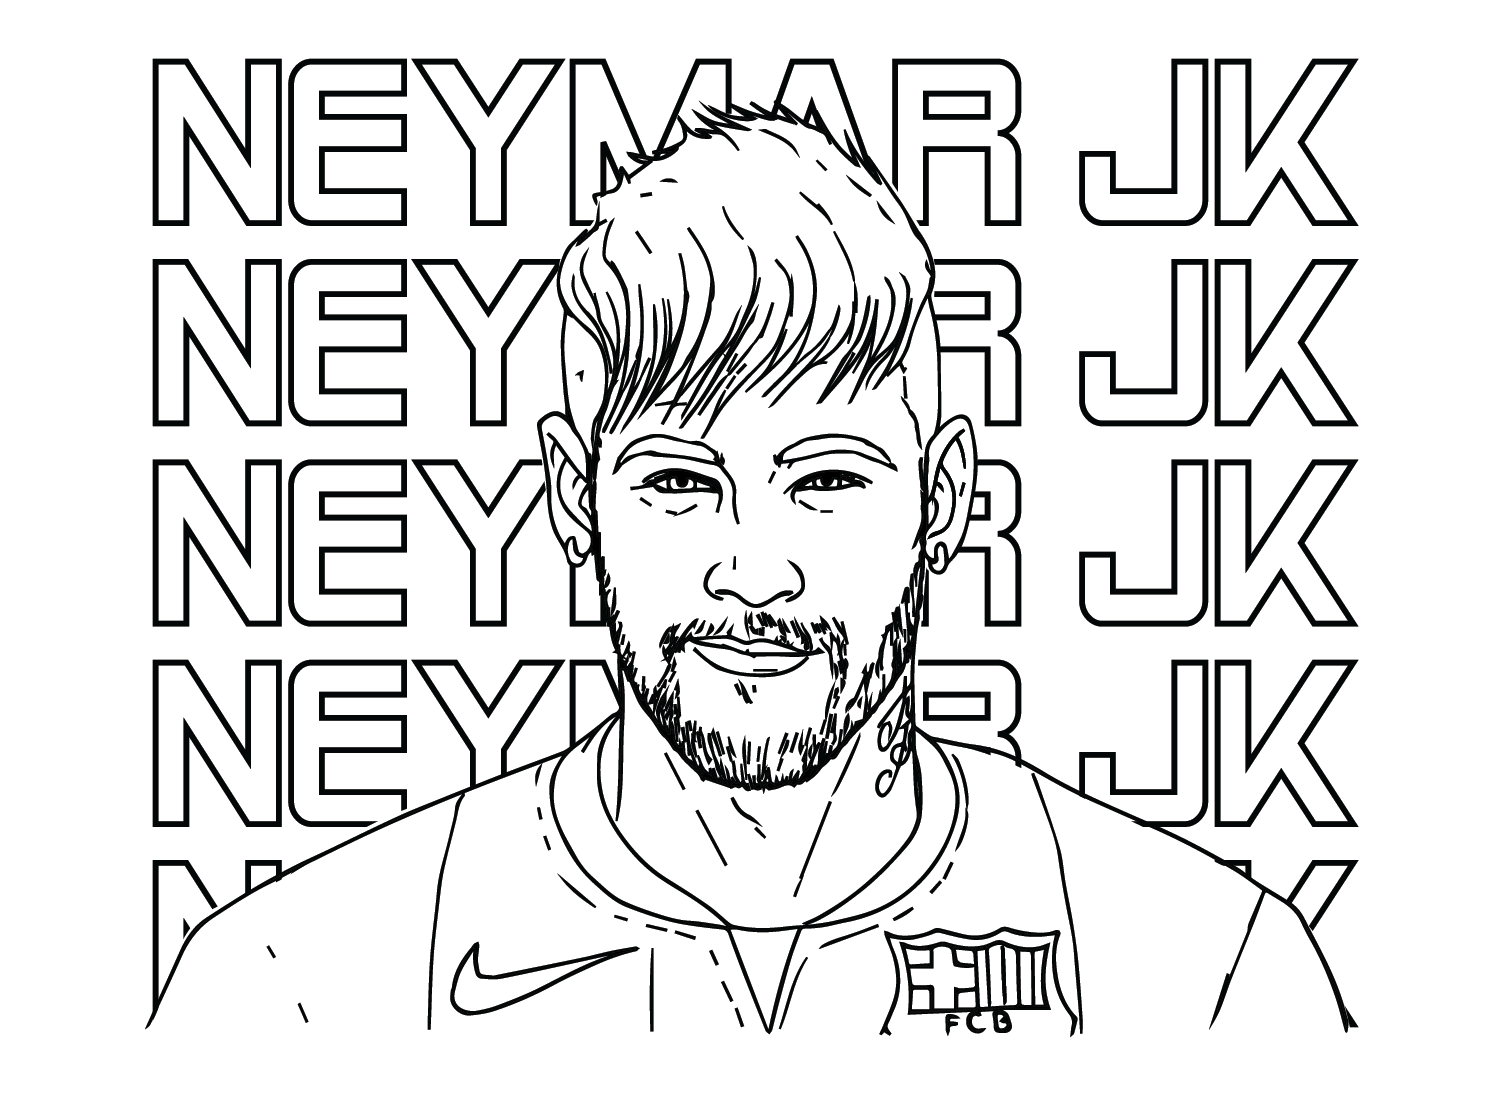 Neymar JK from Neymar